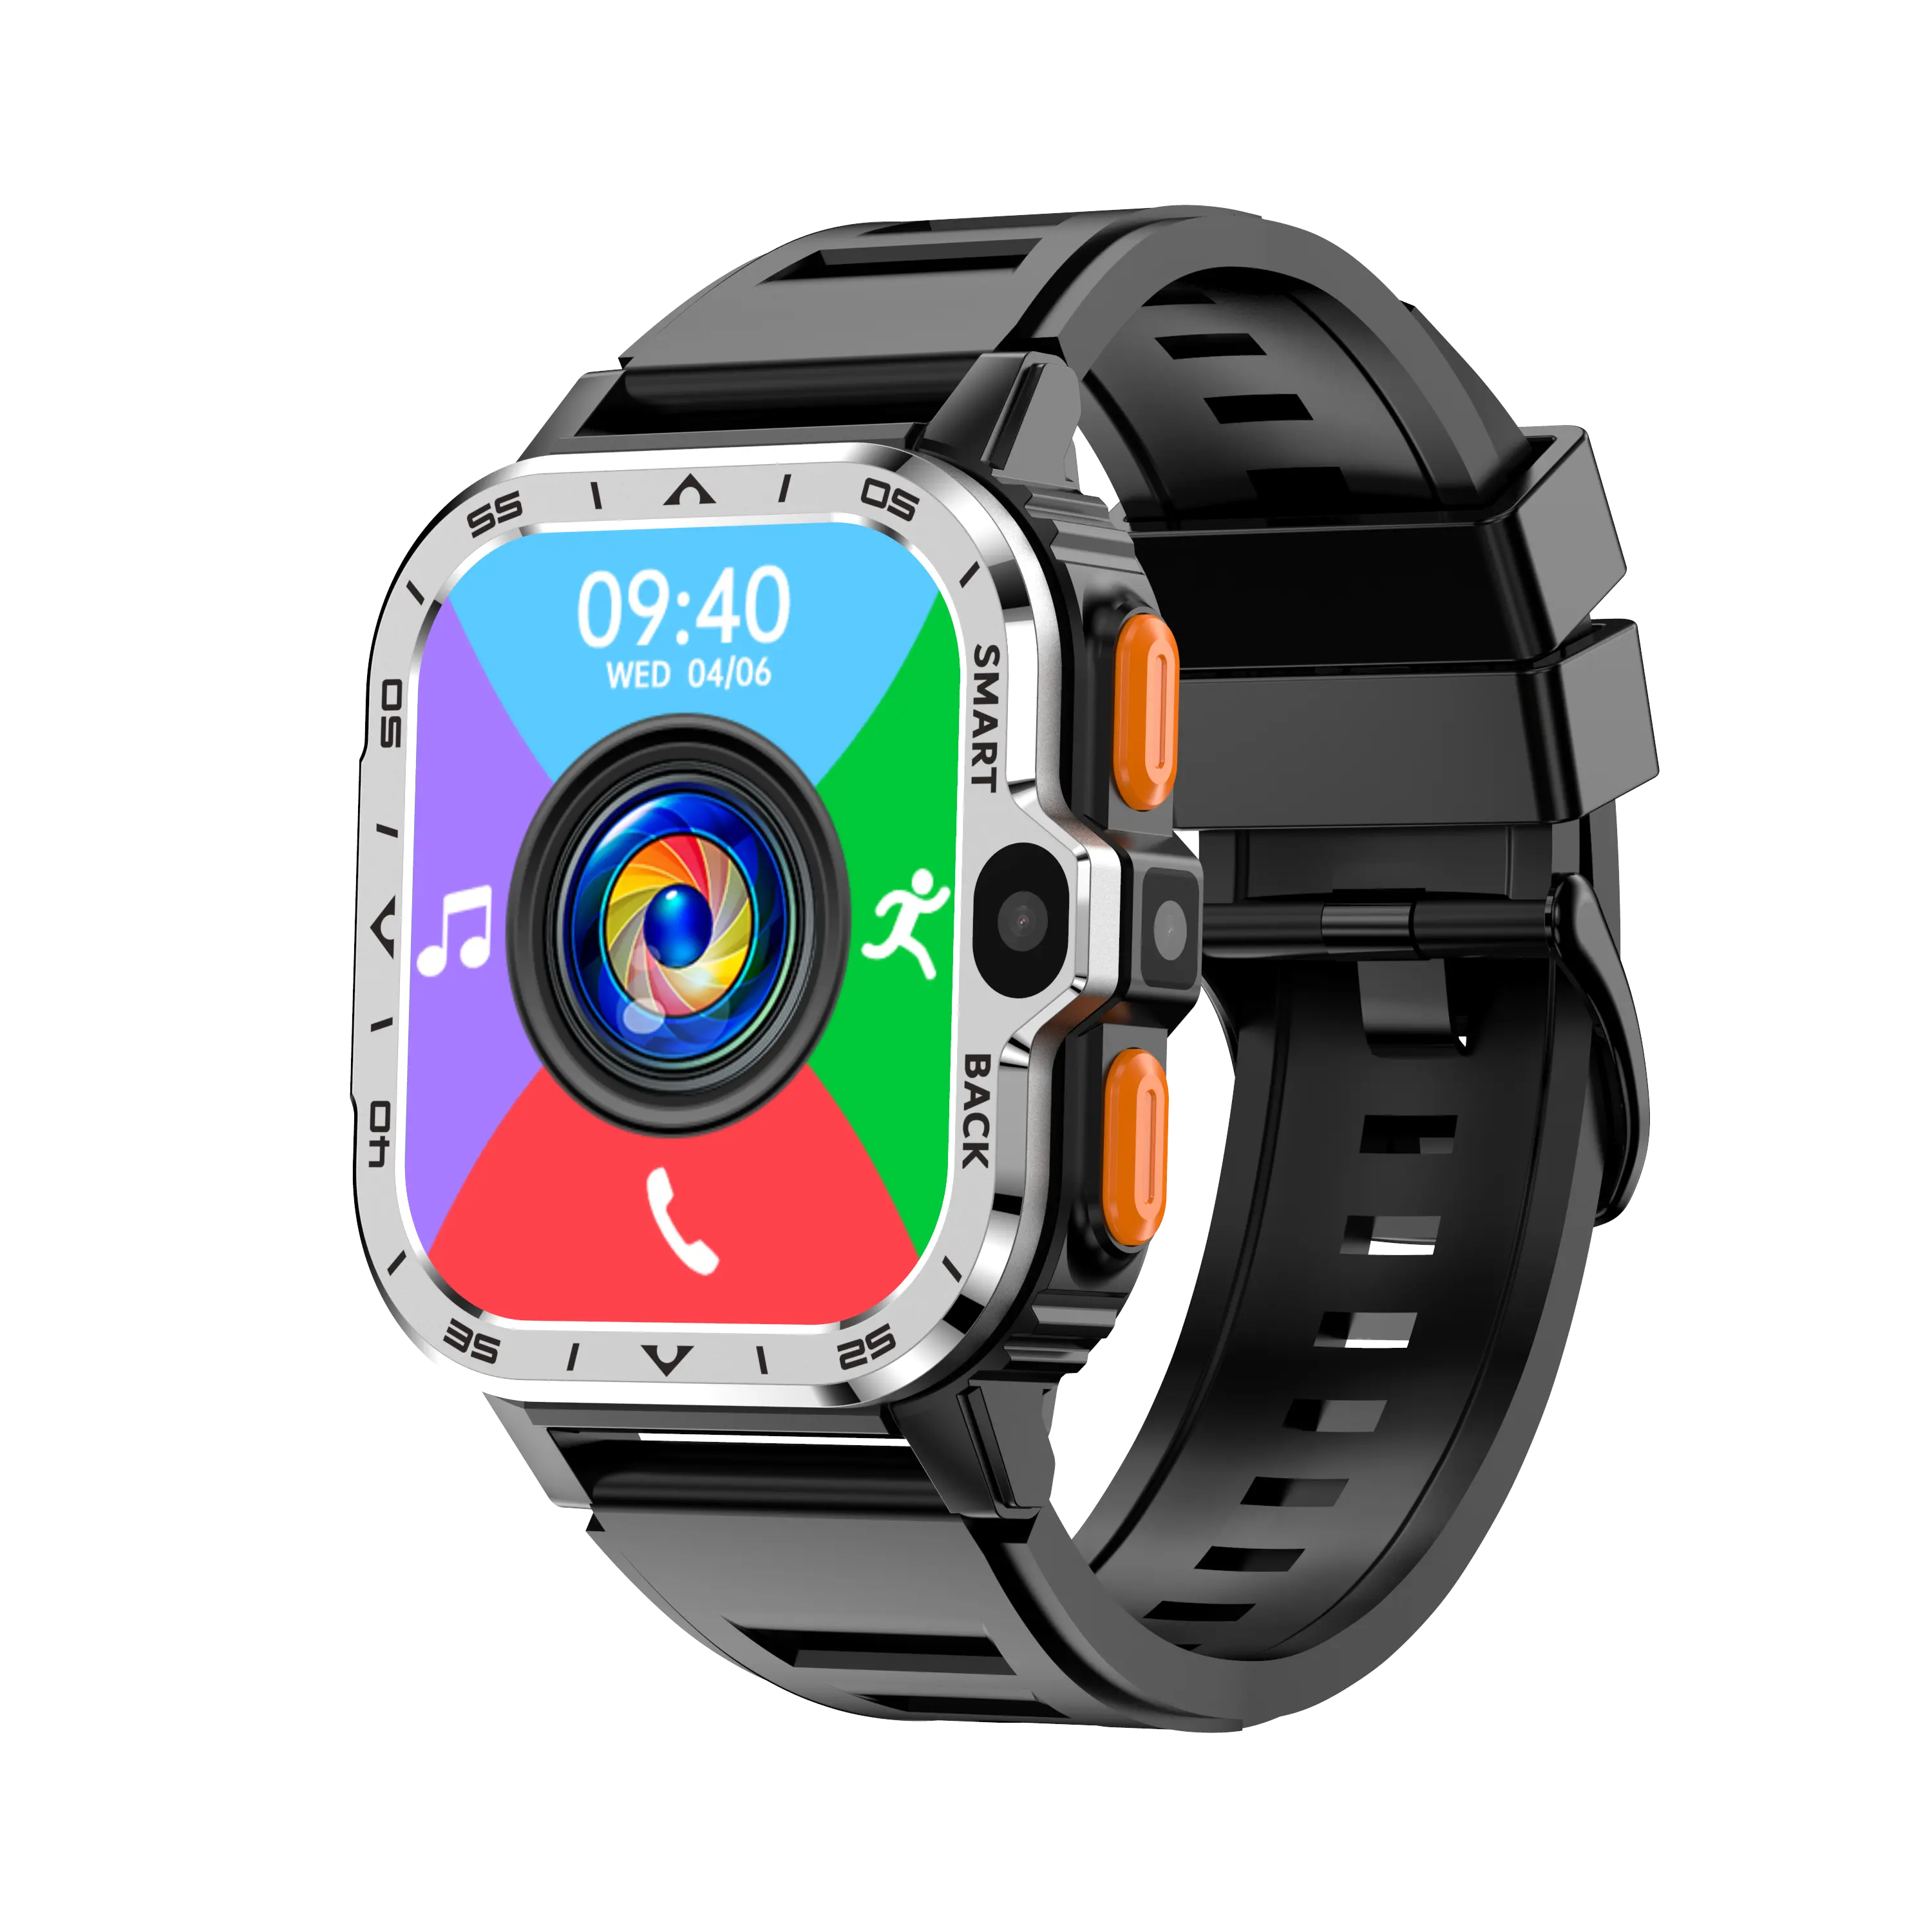 Smochm Android 2G + 16G HD fotocamera posteriore Smart Watch GPS APP Download 4G rete 700mAh batteria Play Store Google Push messaggio